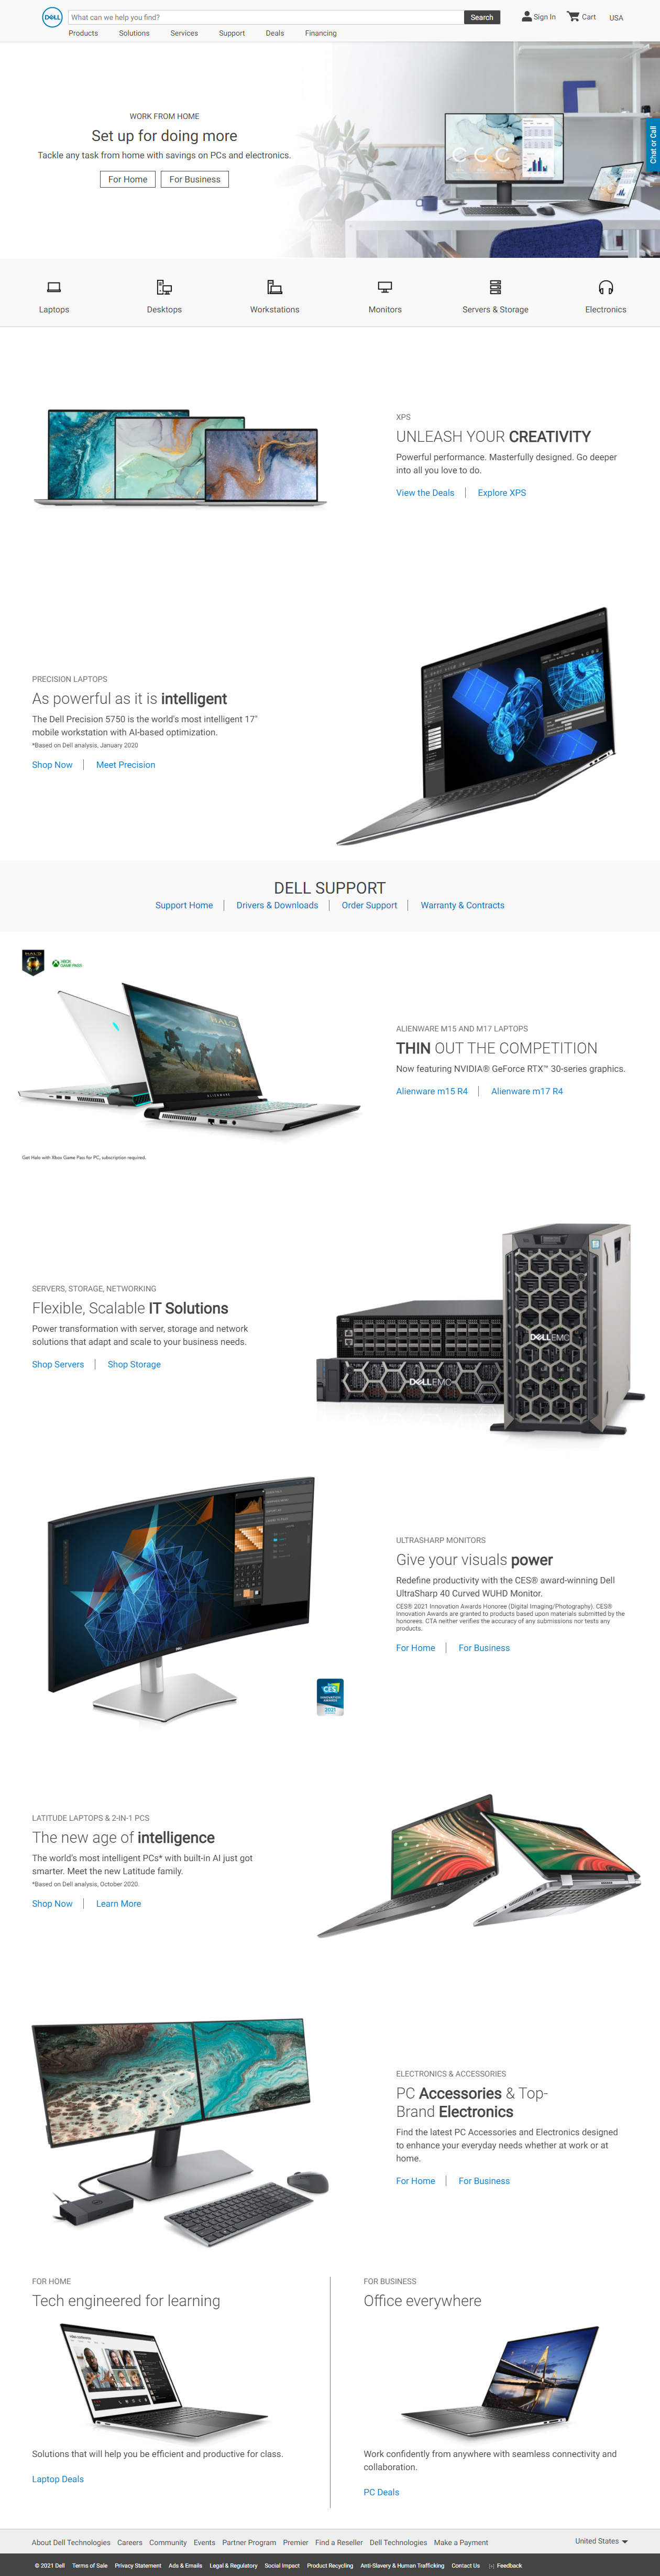 Dell website in 2021